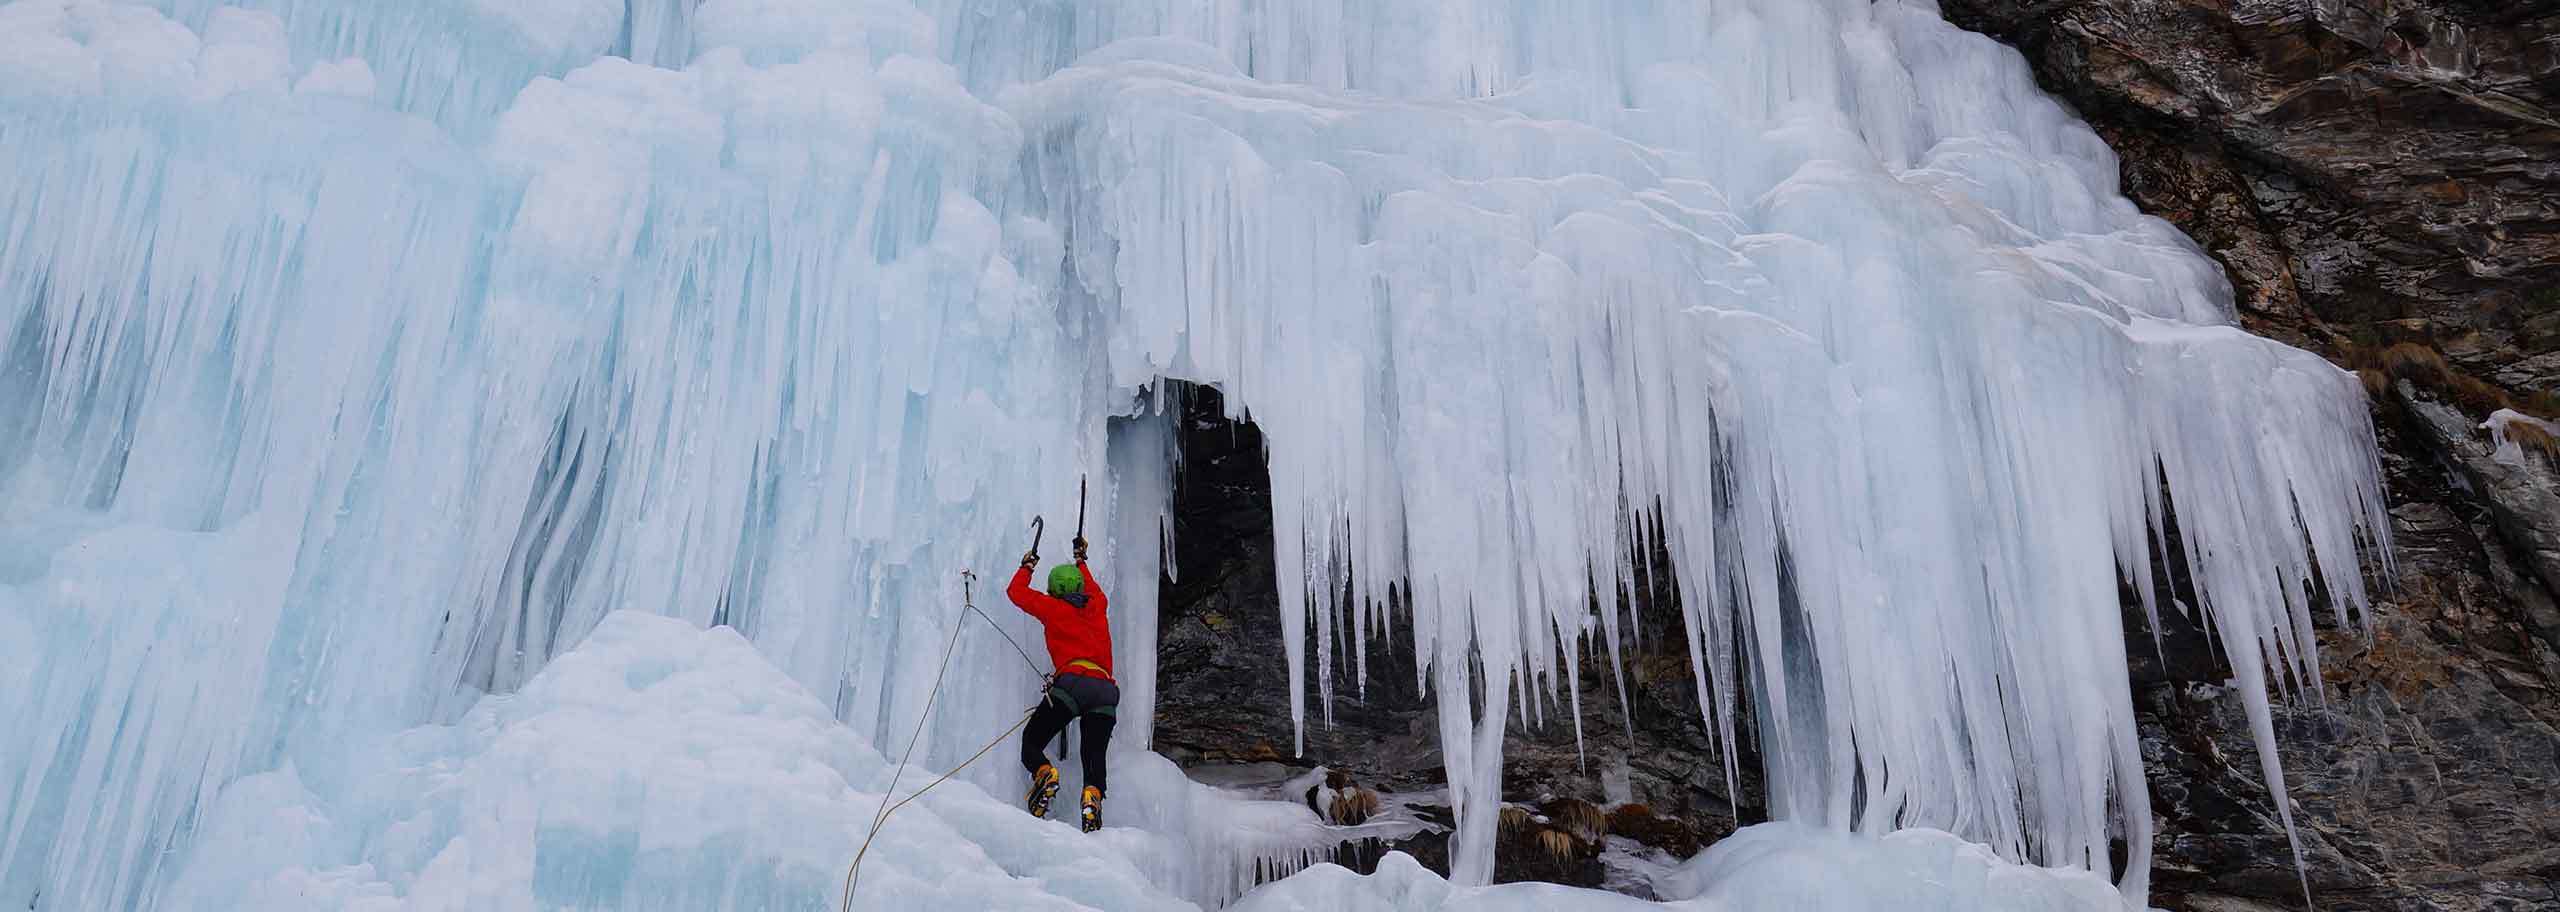 Ice climbing in Madonna di Campiglio, Courses & Multi-pitch Routes